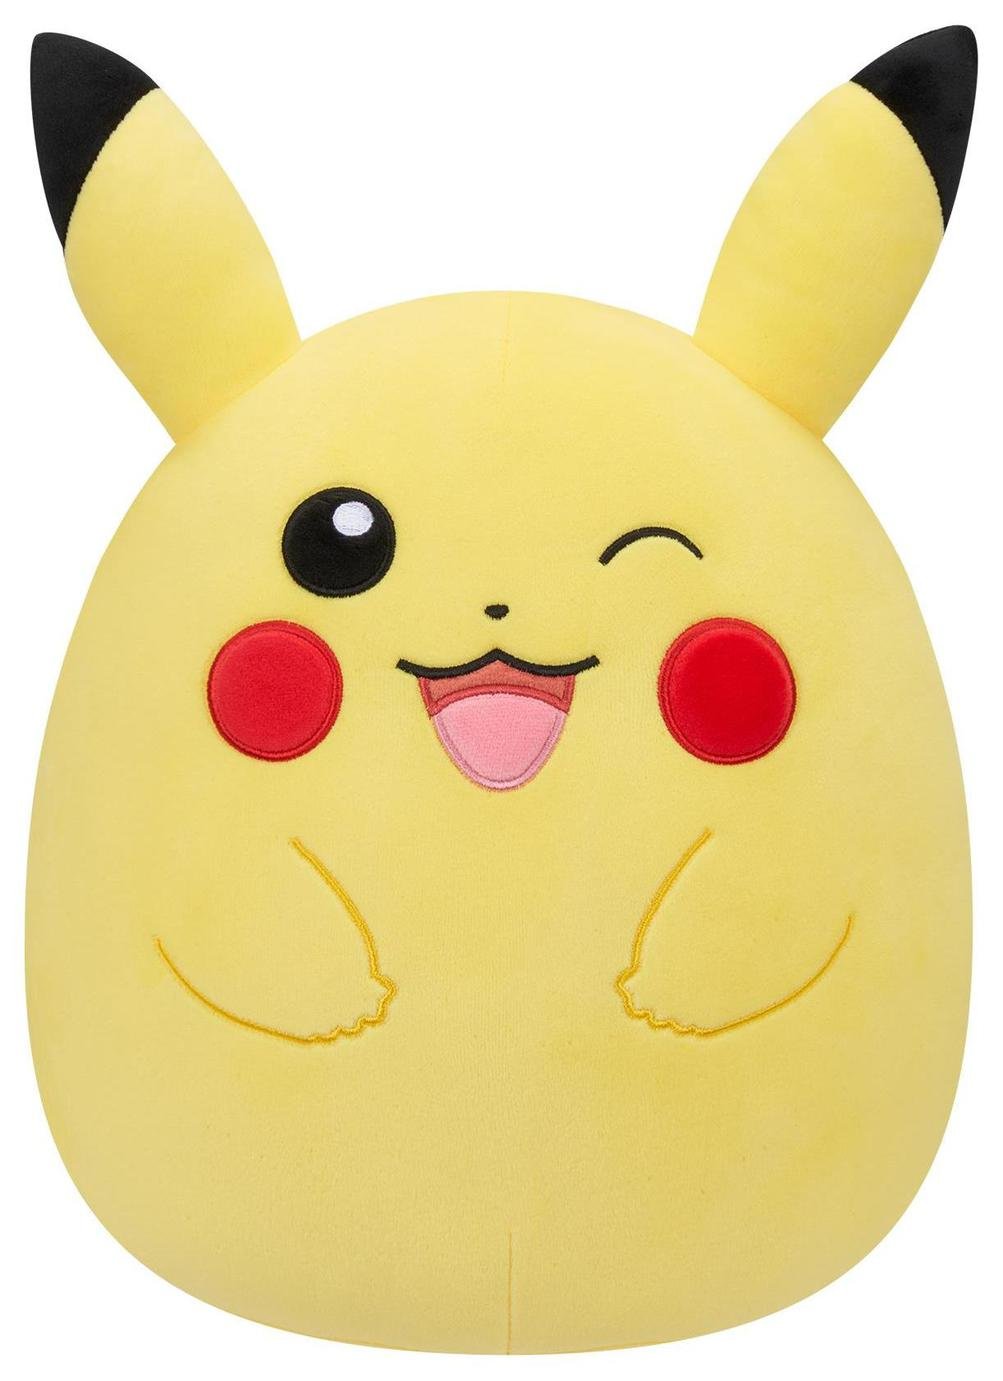 Original Squishmallows Pokémon 14-inch Winking Pikachu Plush